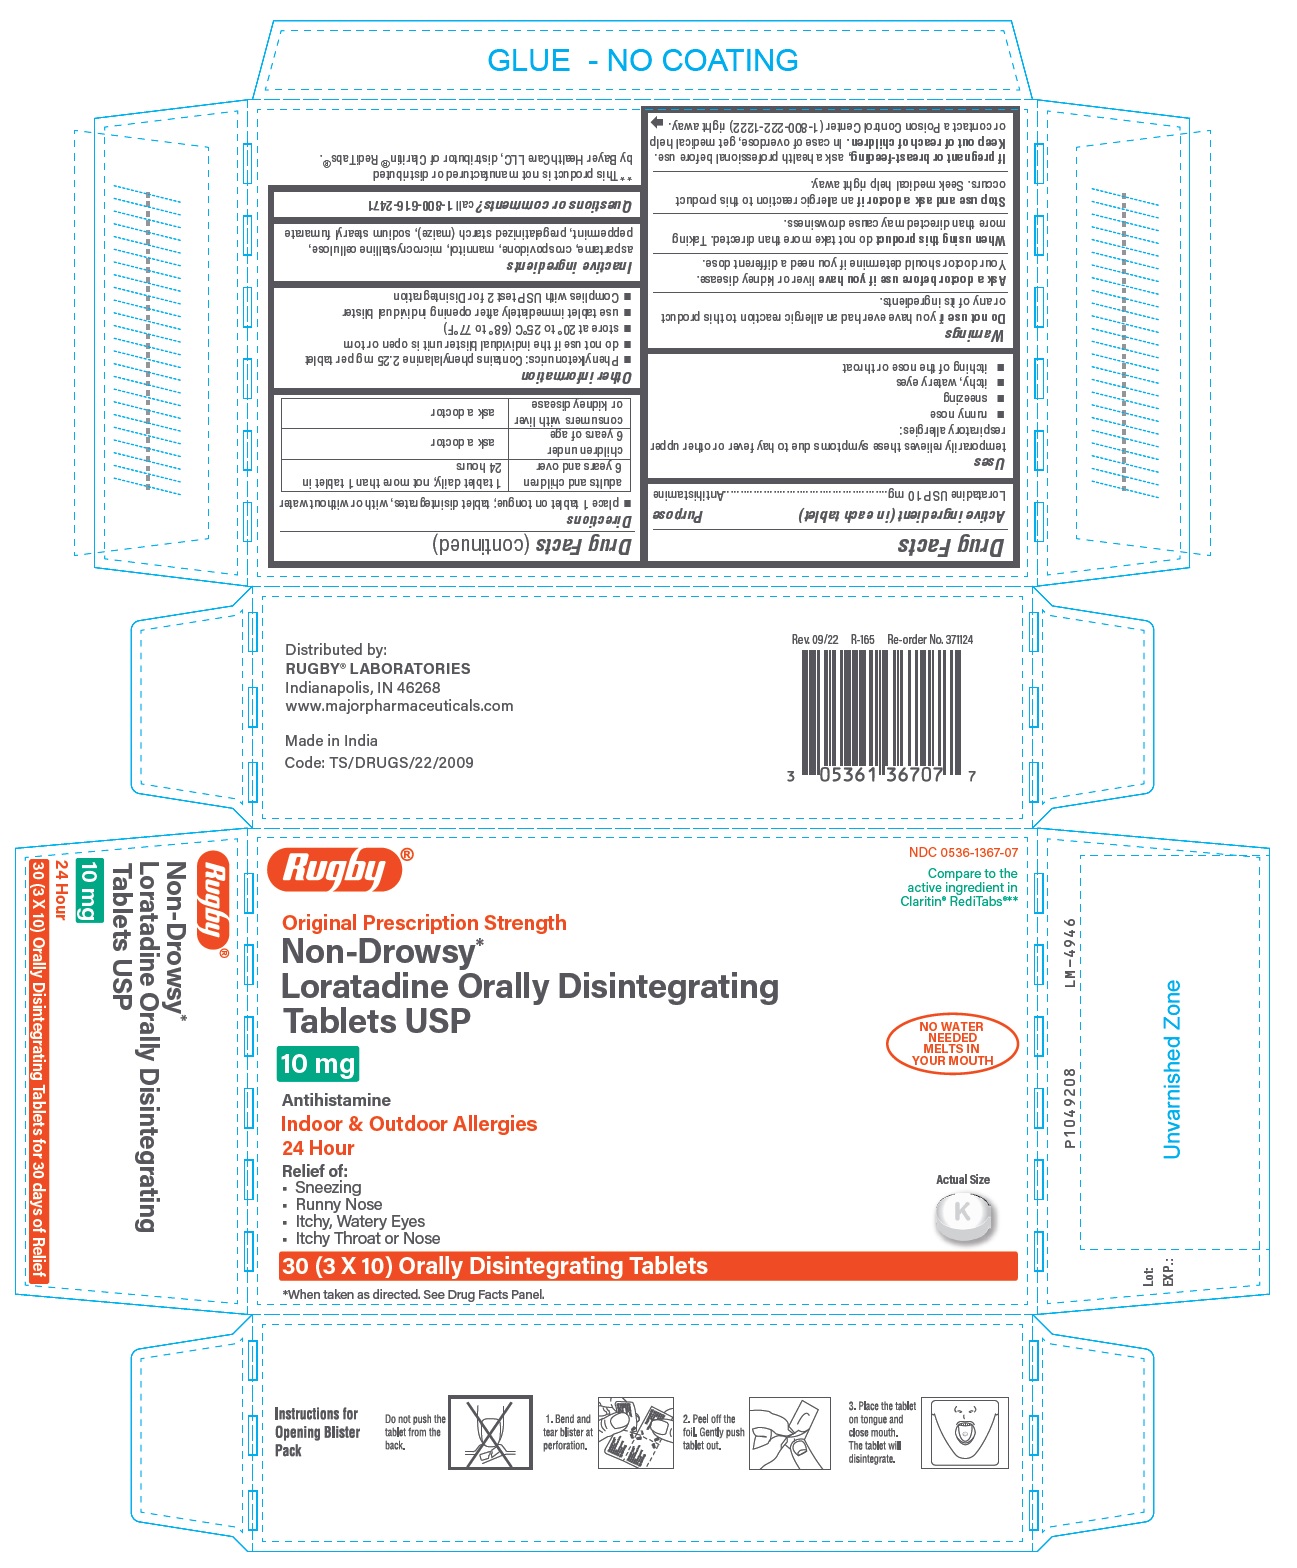 PACKAGE LABEL-PRINCIPAL DISPLAY PANEL - 10 mg, Blister Carton 30 (3 X 10) Orally Disintegrating Tablets